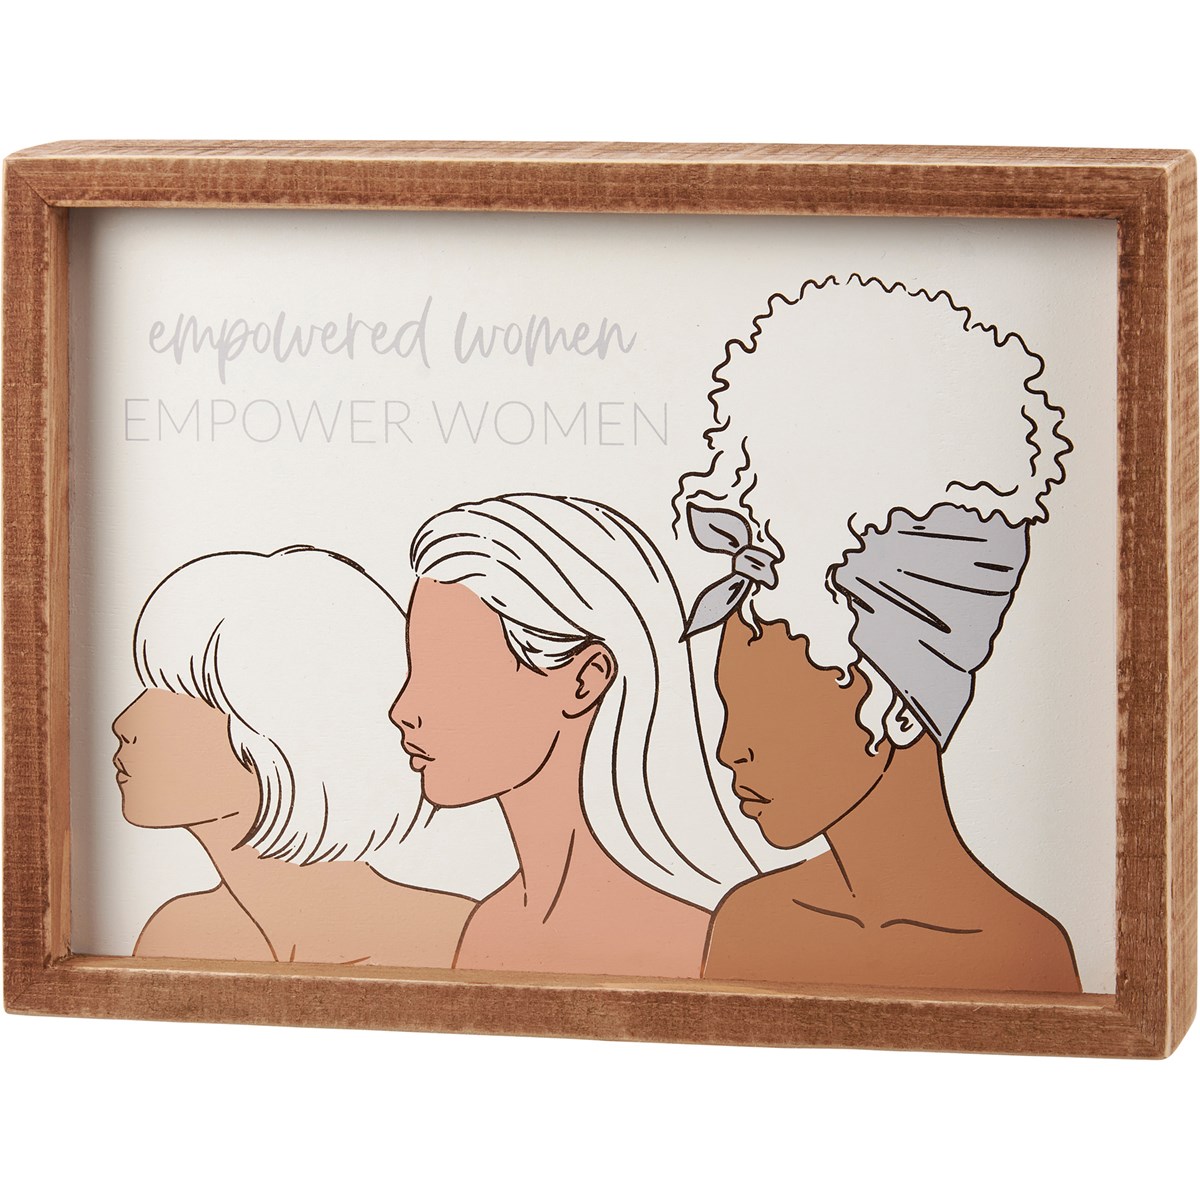 Inset Box Sign - Empower Women - 10" x 7.50" x 1.75" - Wood